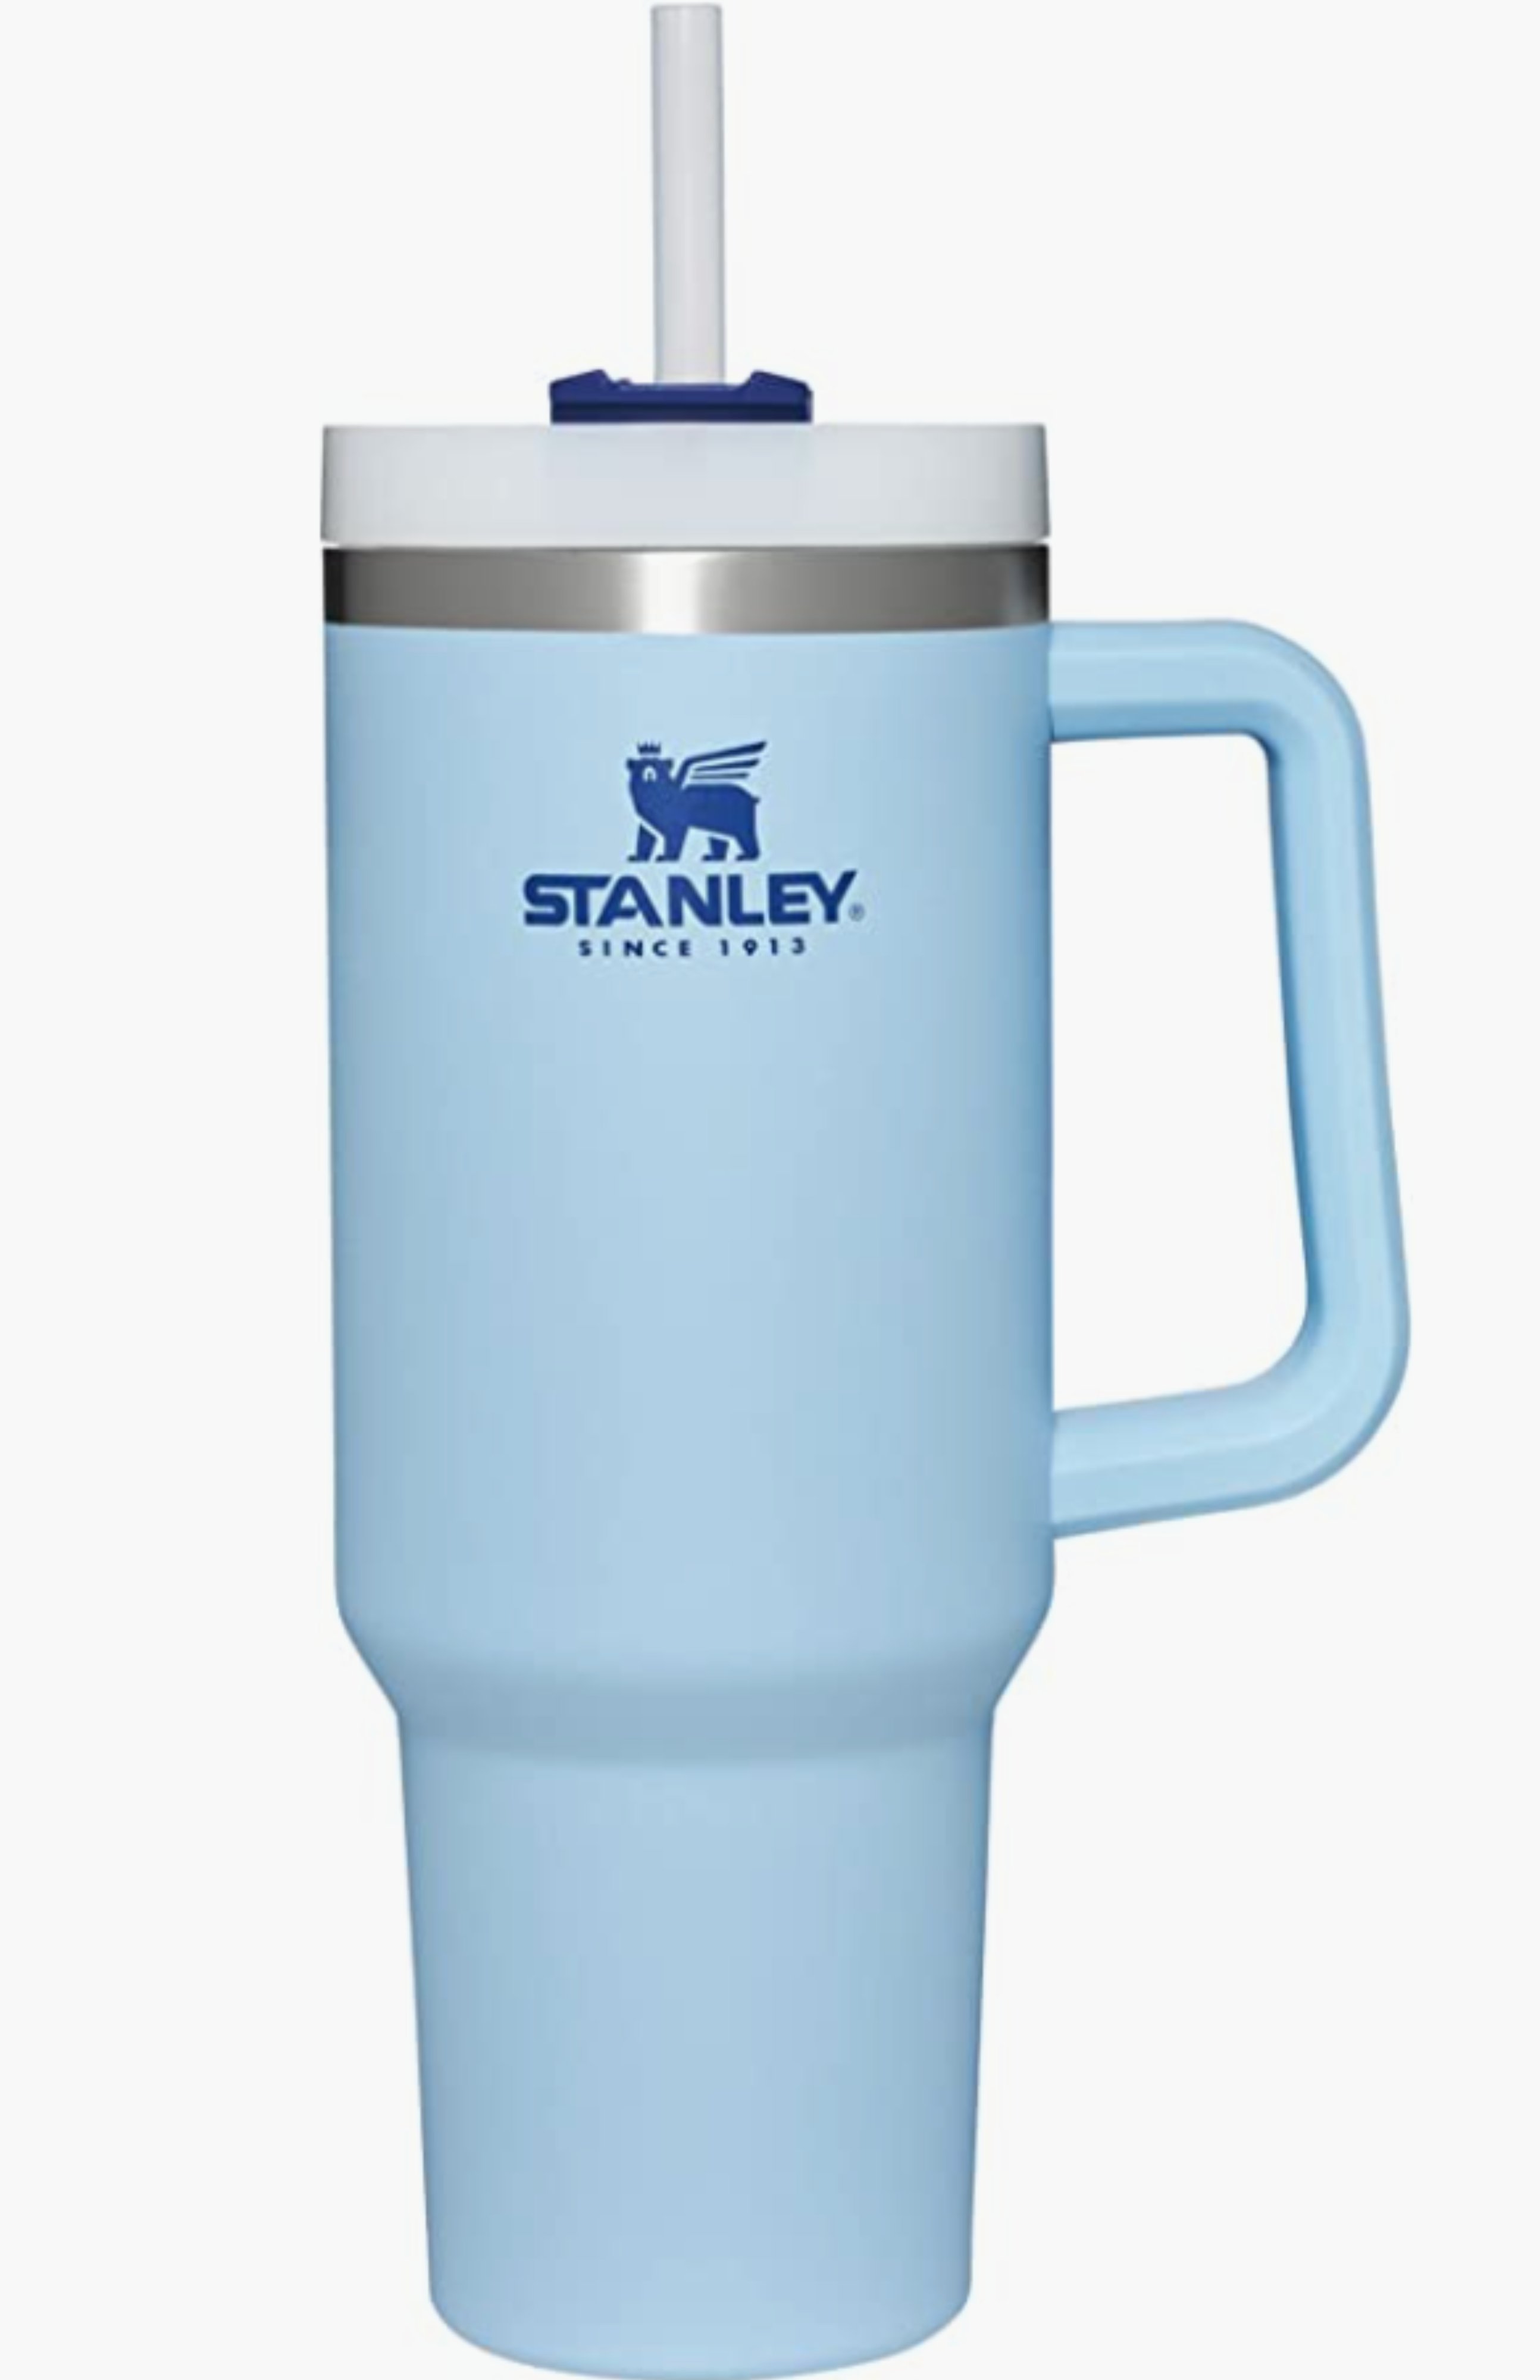 https://www.washingtonian.com/wp-content/uploads/2022/11/Stanley-cup.jpg